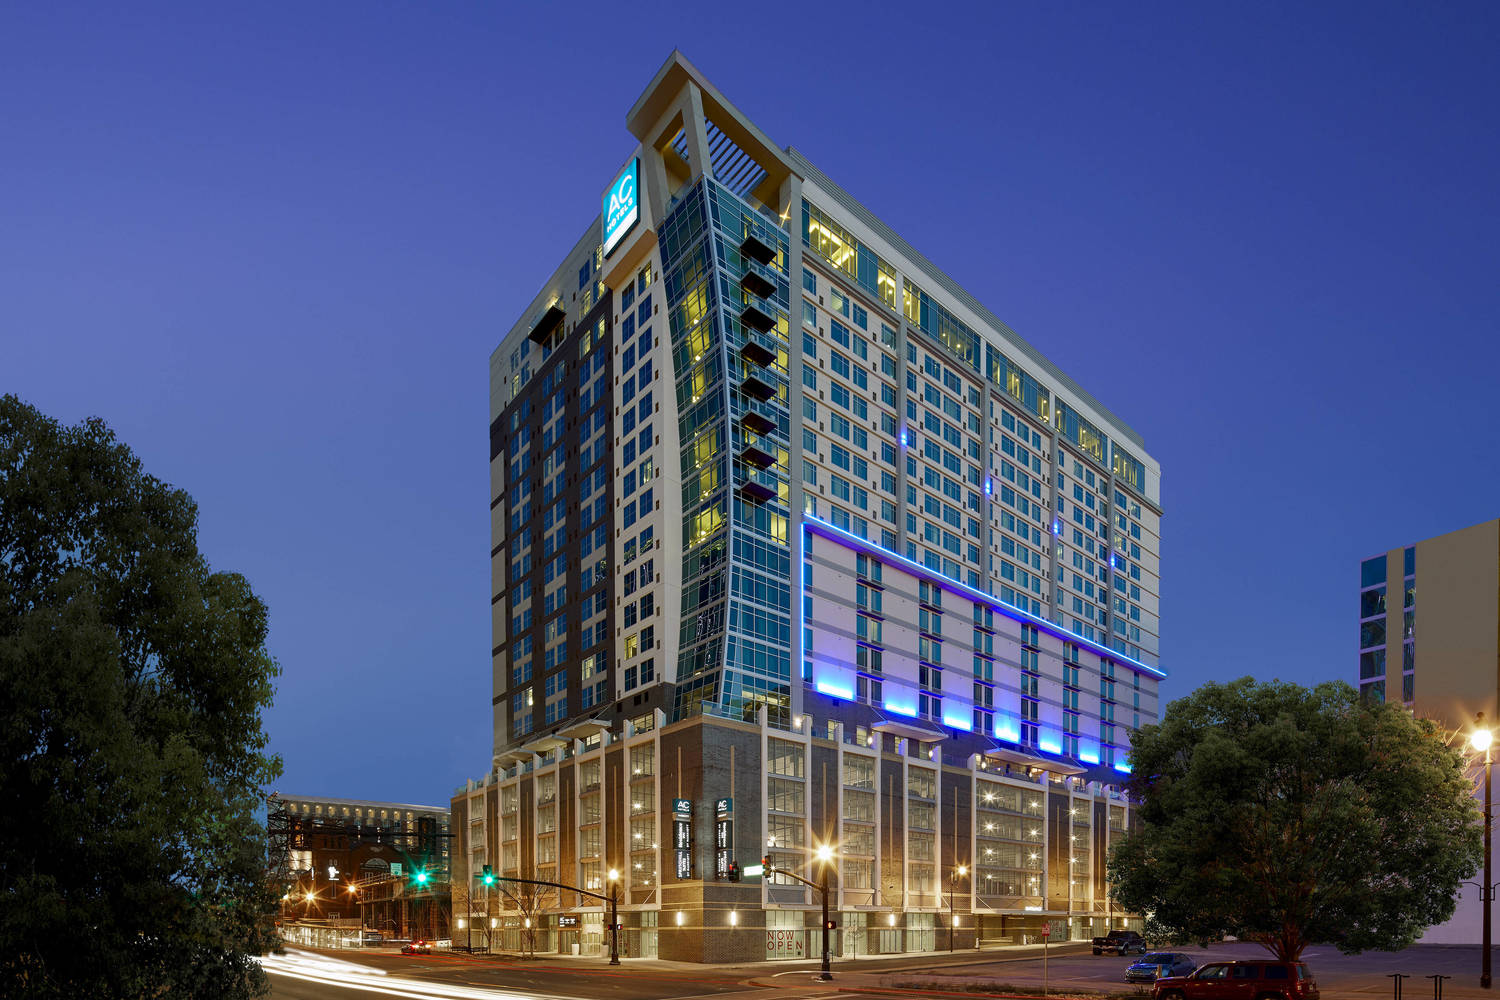 AC Hotel by Marriott Nashville Downtown, Nashville, TN Jobs